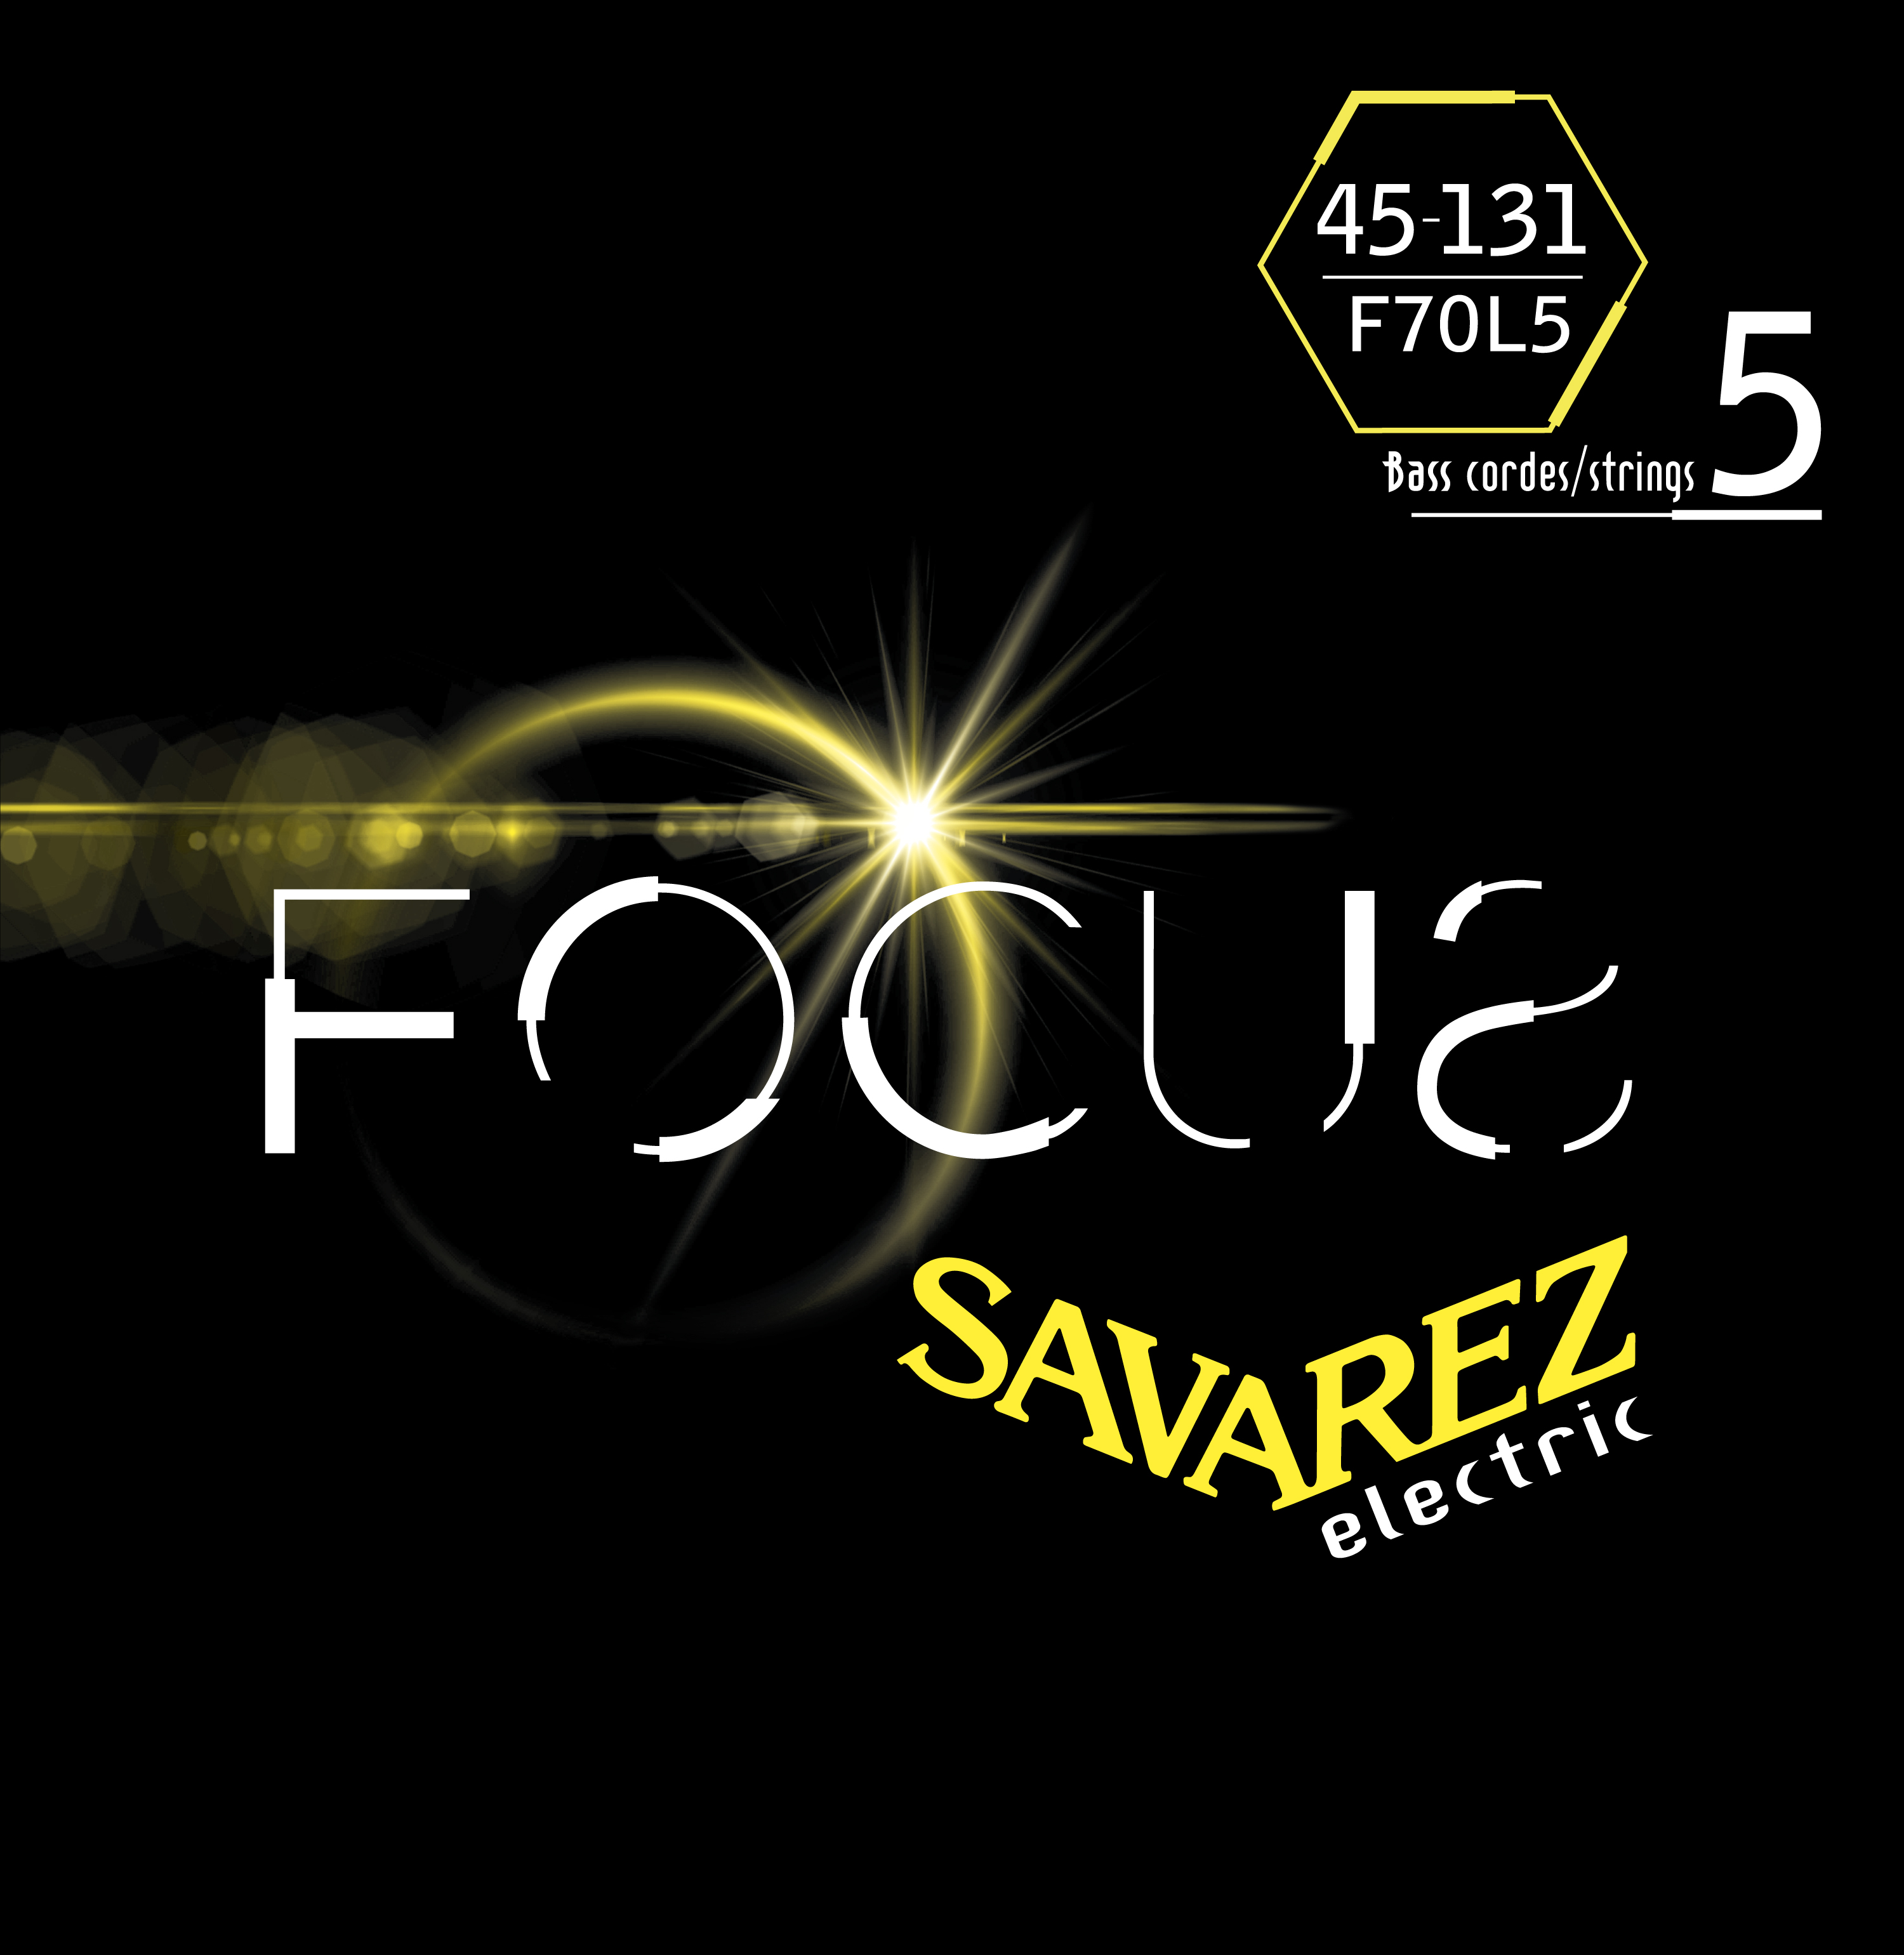 SAVAREZ ELECTRIC FOCUS F70L5